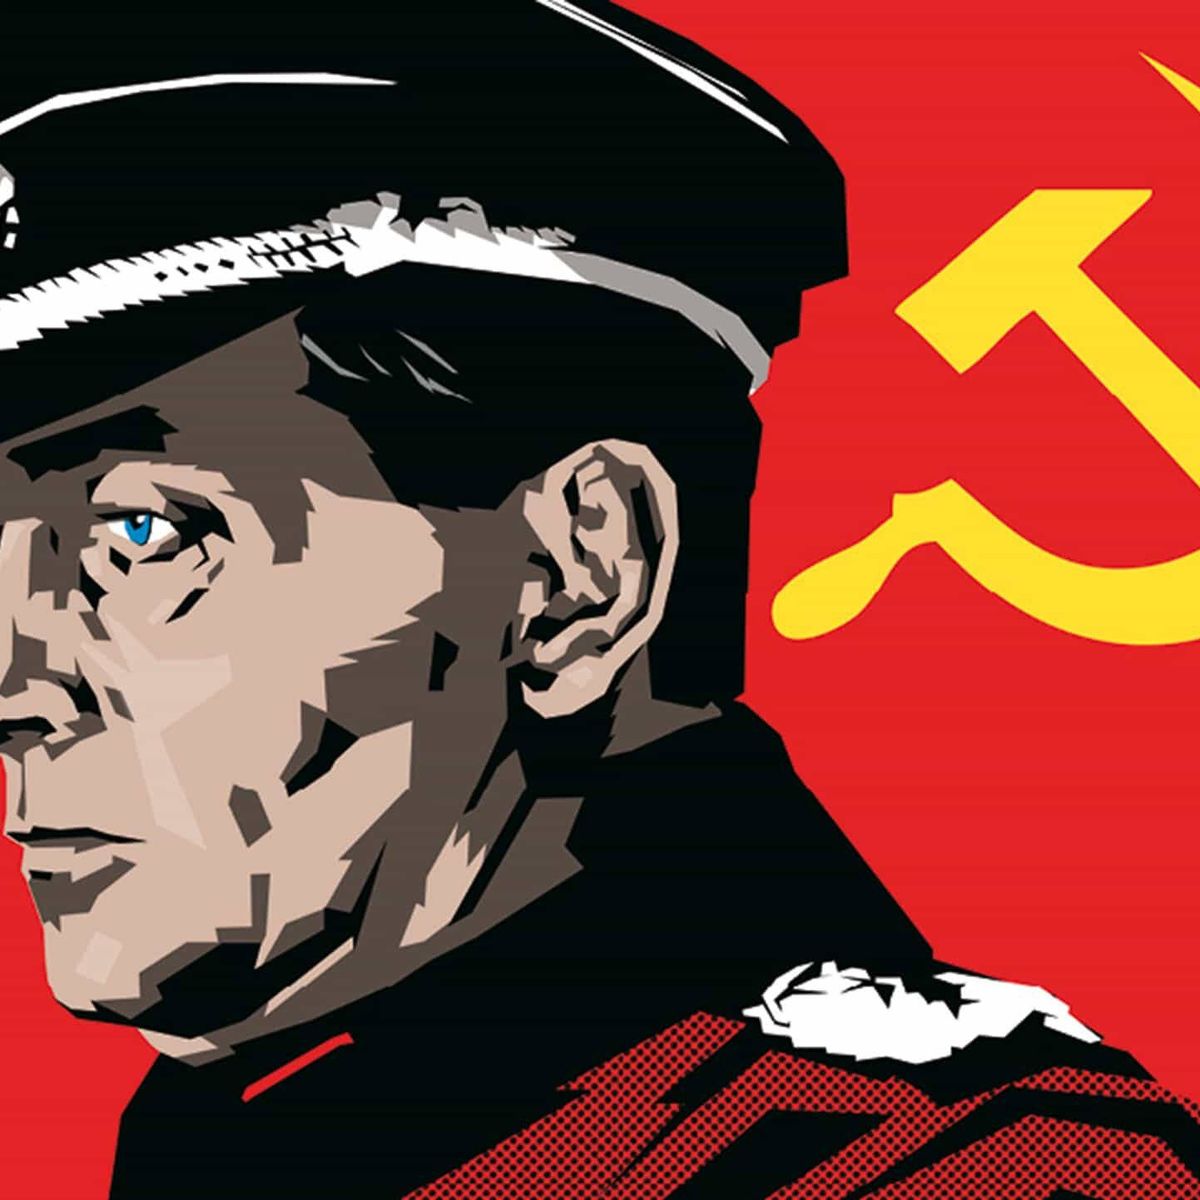 La serie de espías soviética que inspiró a Putin para dominar Rusia